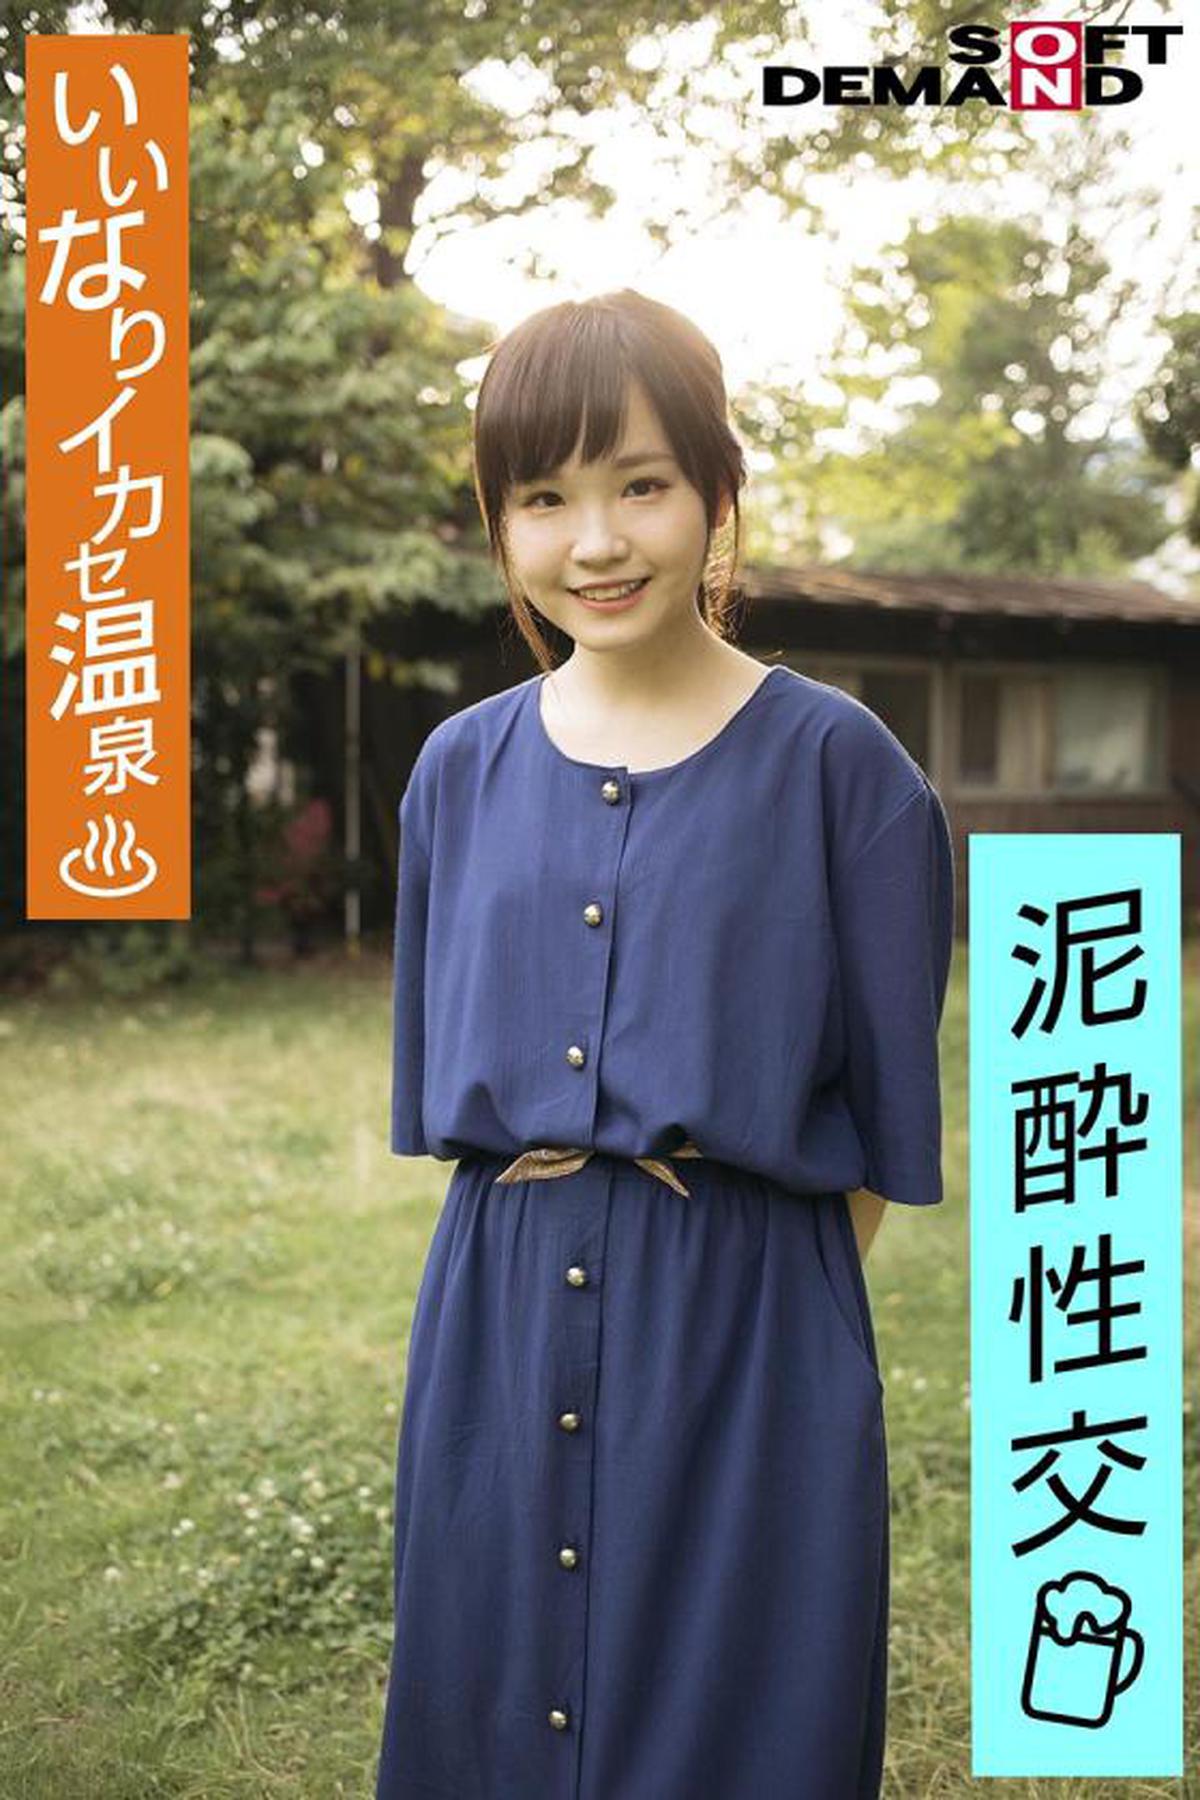 107EMOI-030 Emo Girl / Compliant Ikase Onsen / Drunk Sex / Nyotaimori / Sake / Short Height 142cm / Osaka Dialect / Haru-chan (20) Haru Ito